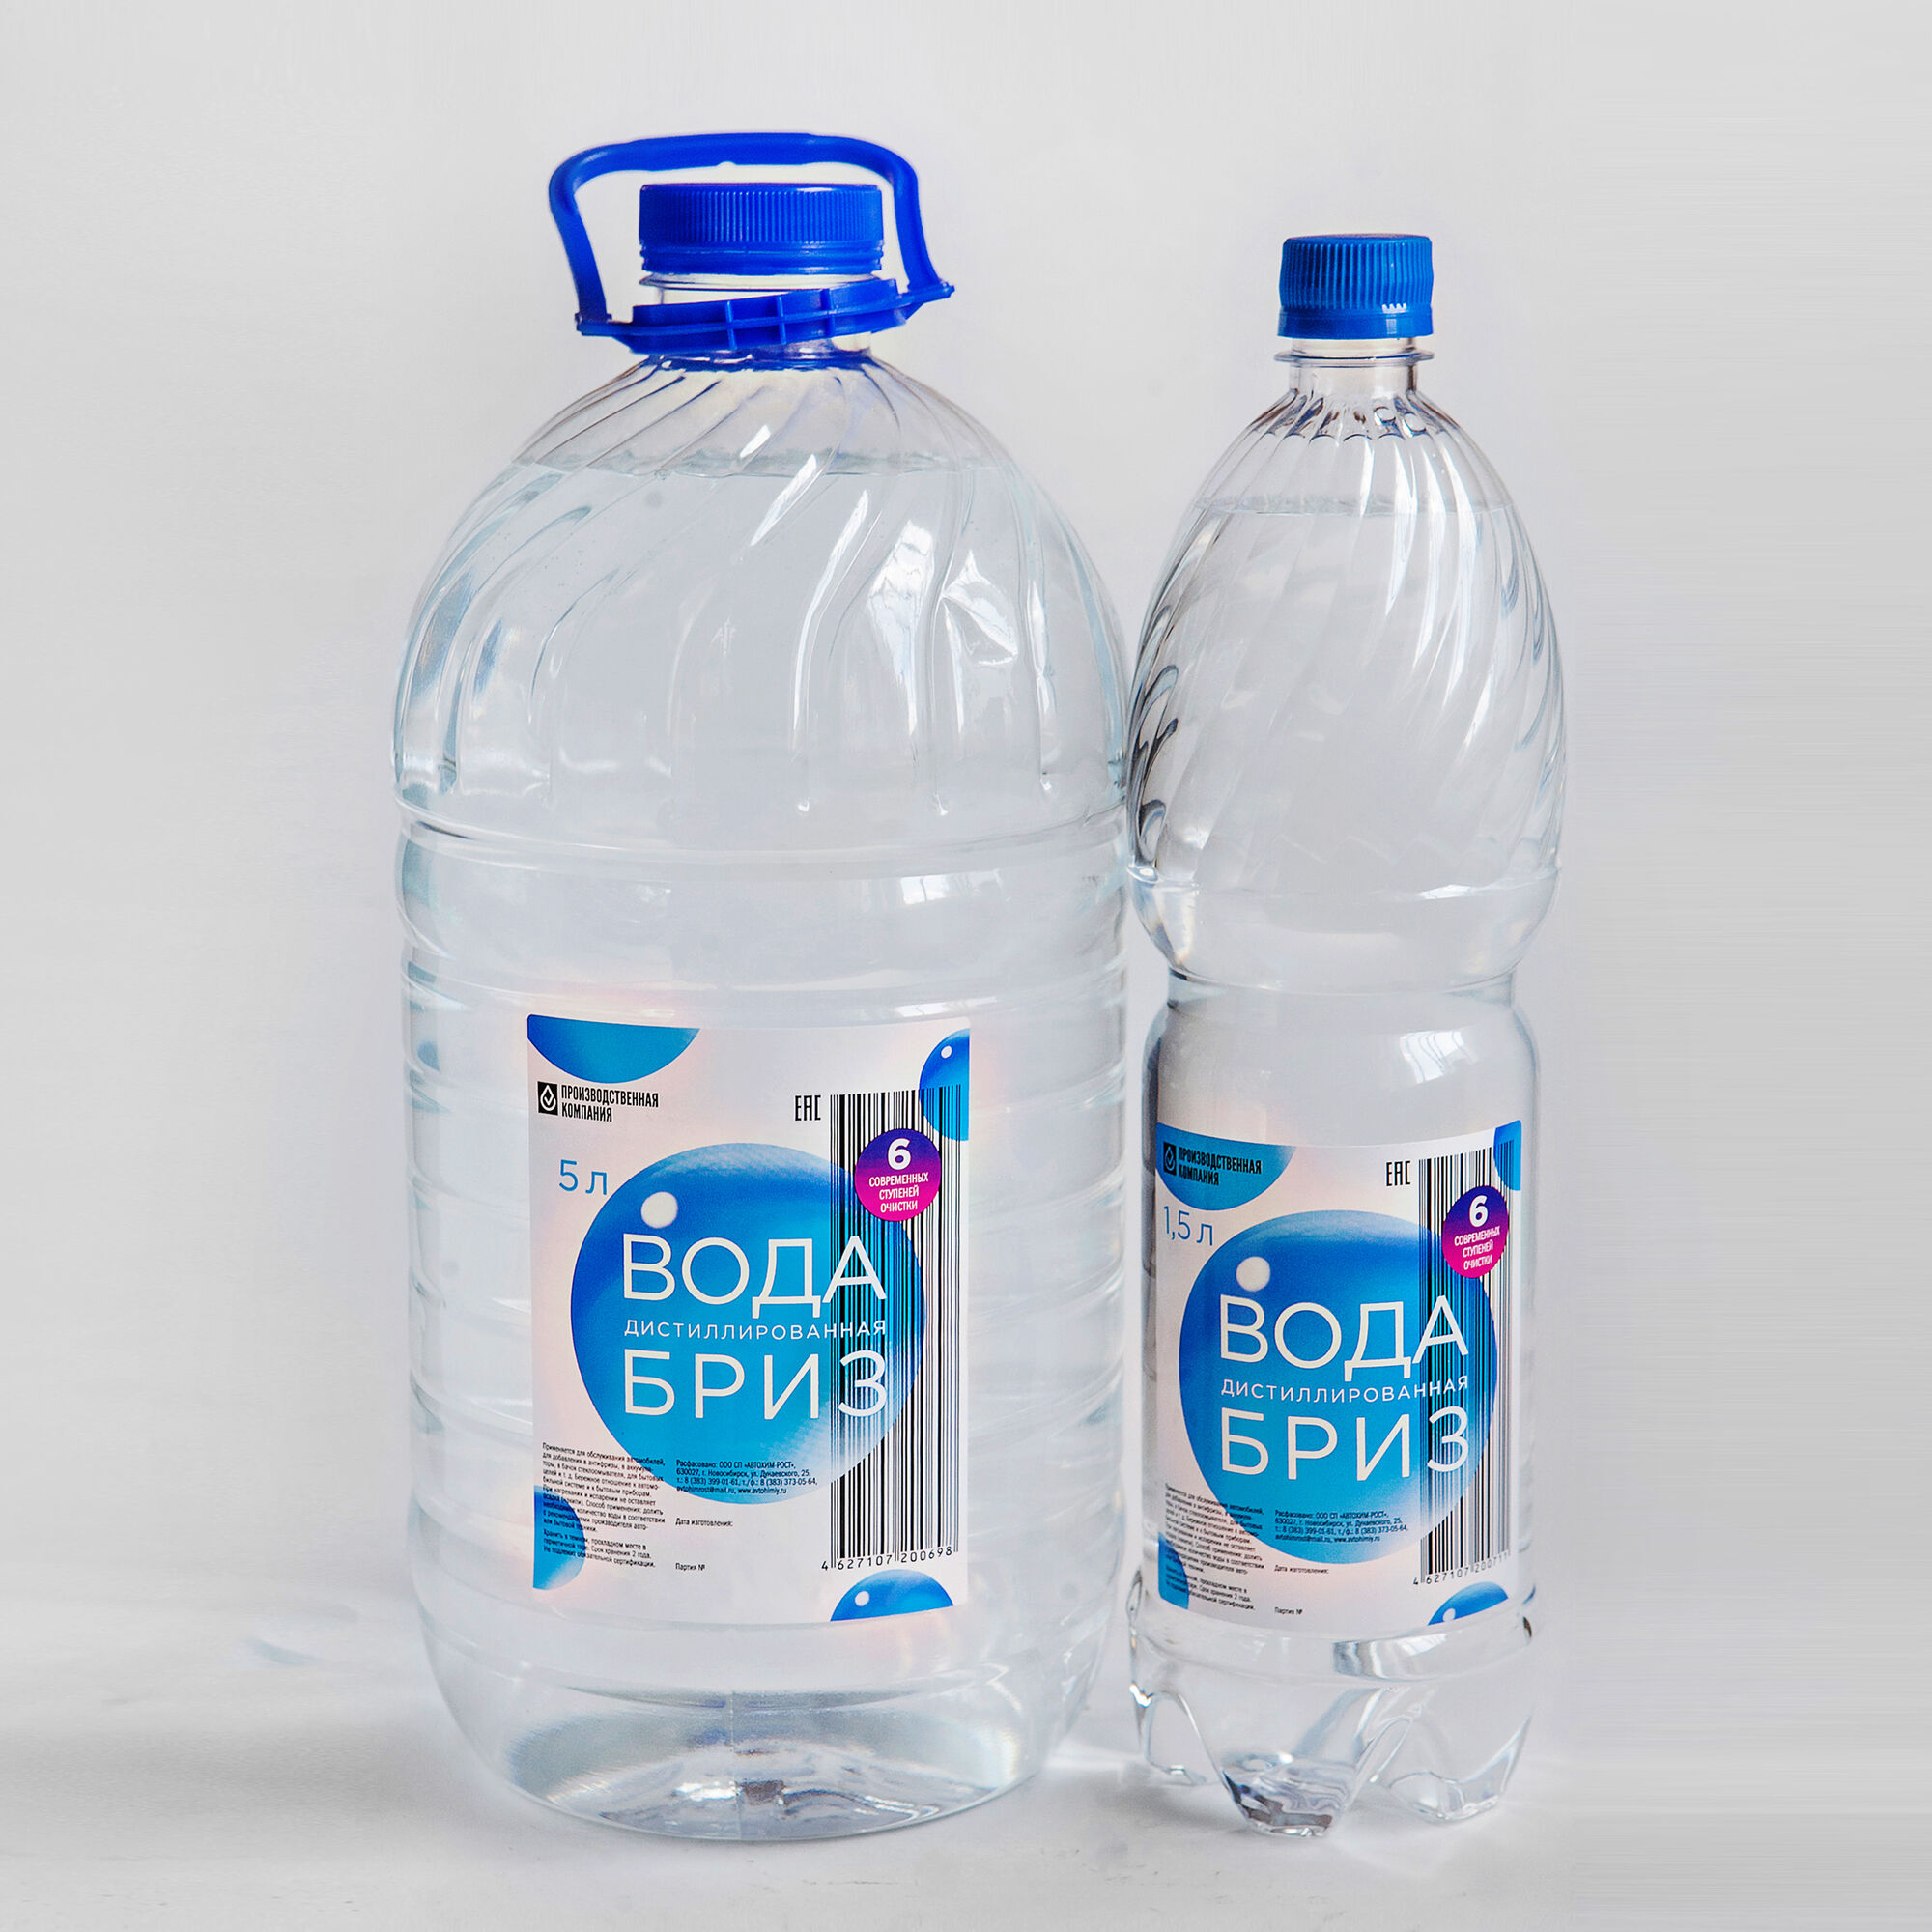 Вода дистиллированная Бриз ГОСТ 58144-2018 налив/литр